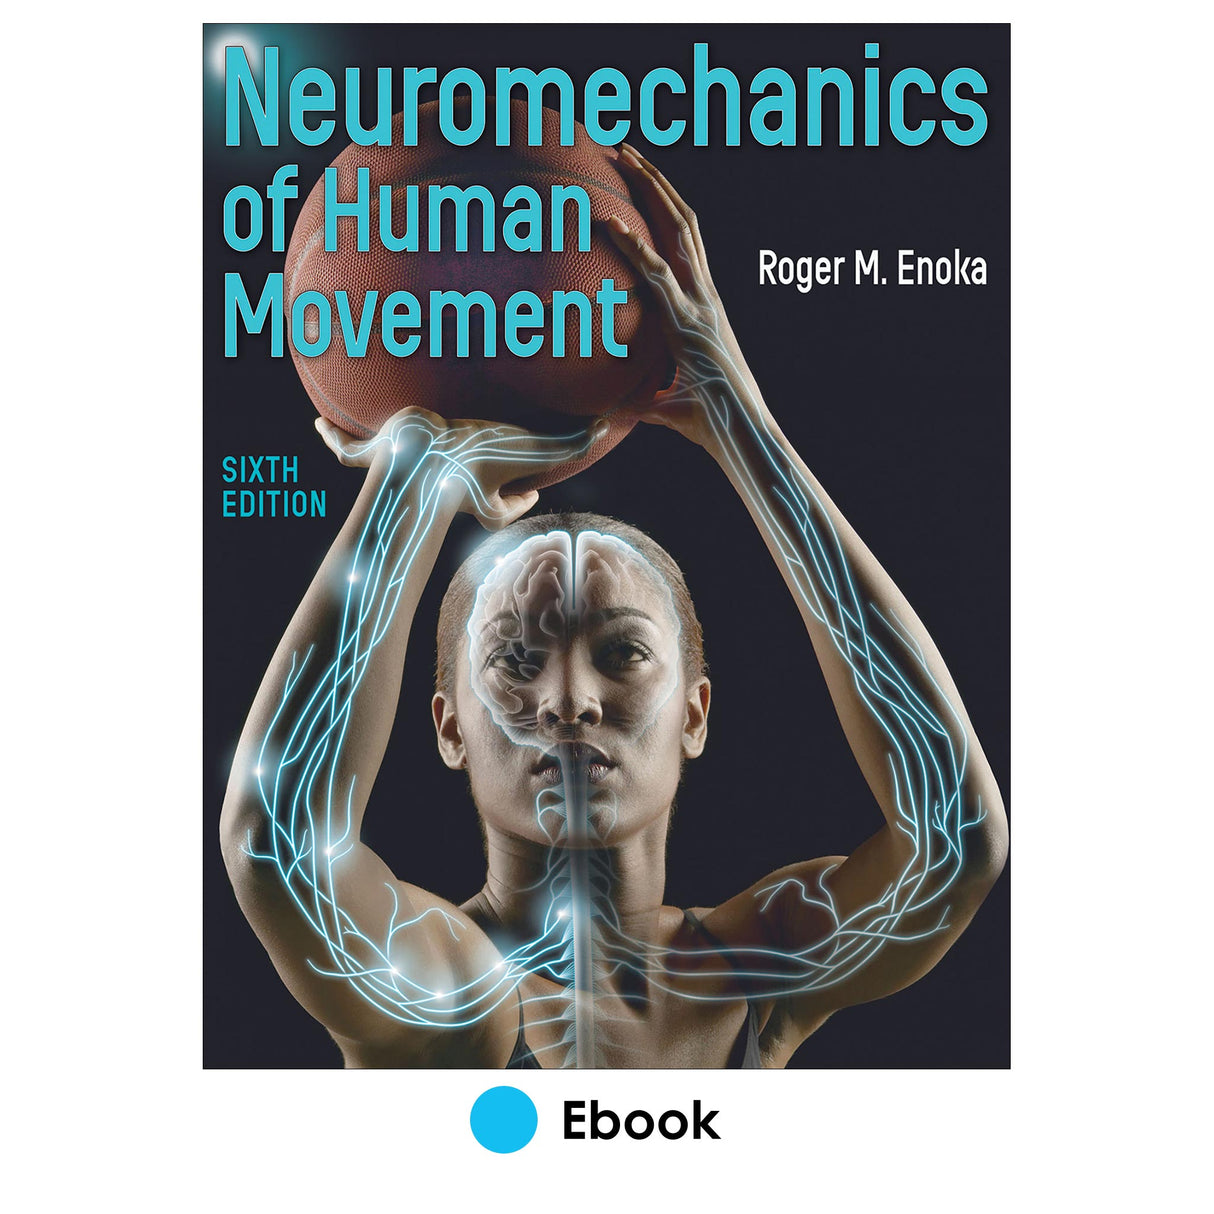 Neuromechanics of Human Movement 6th Edition epub